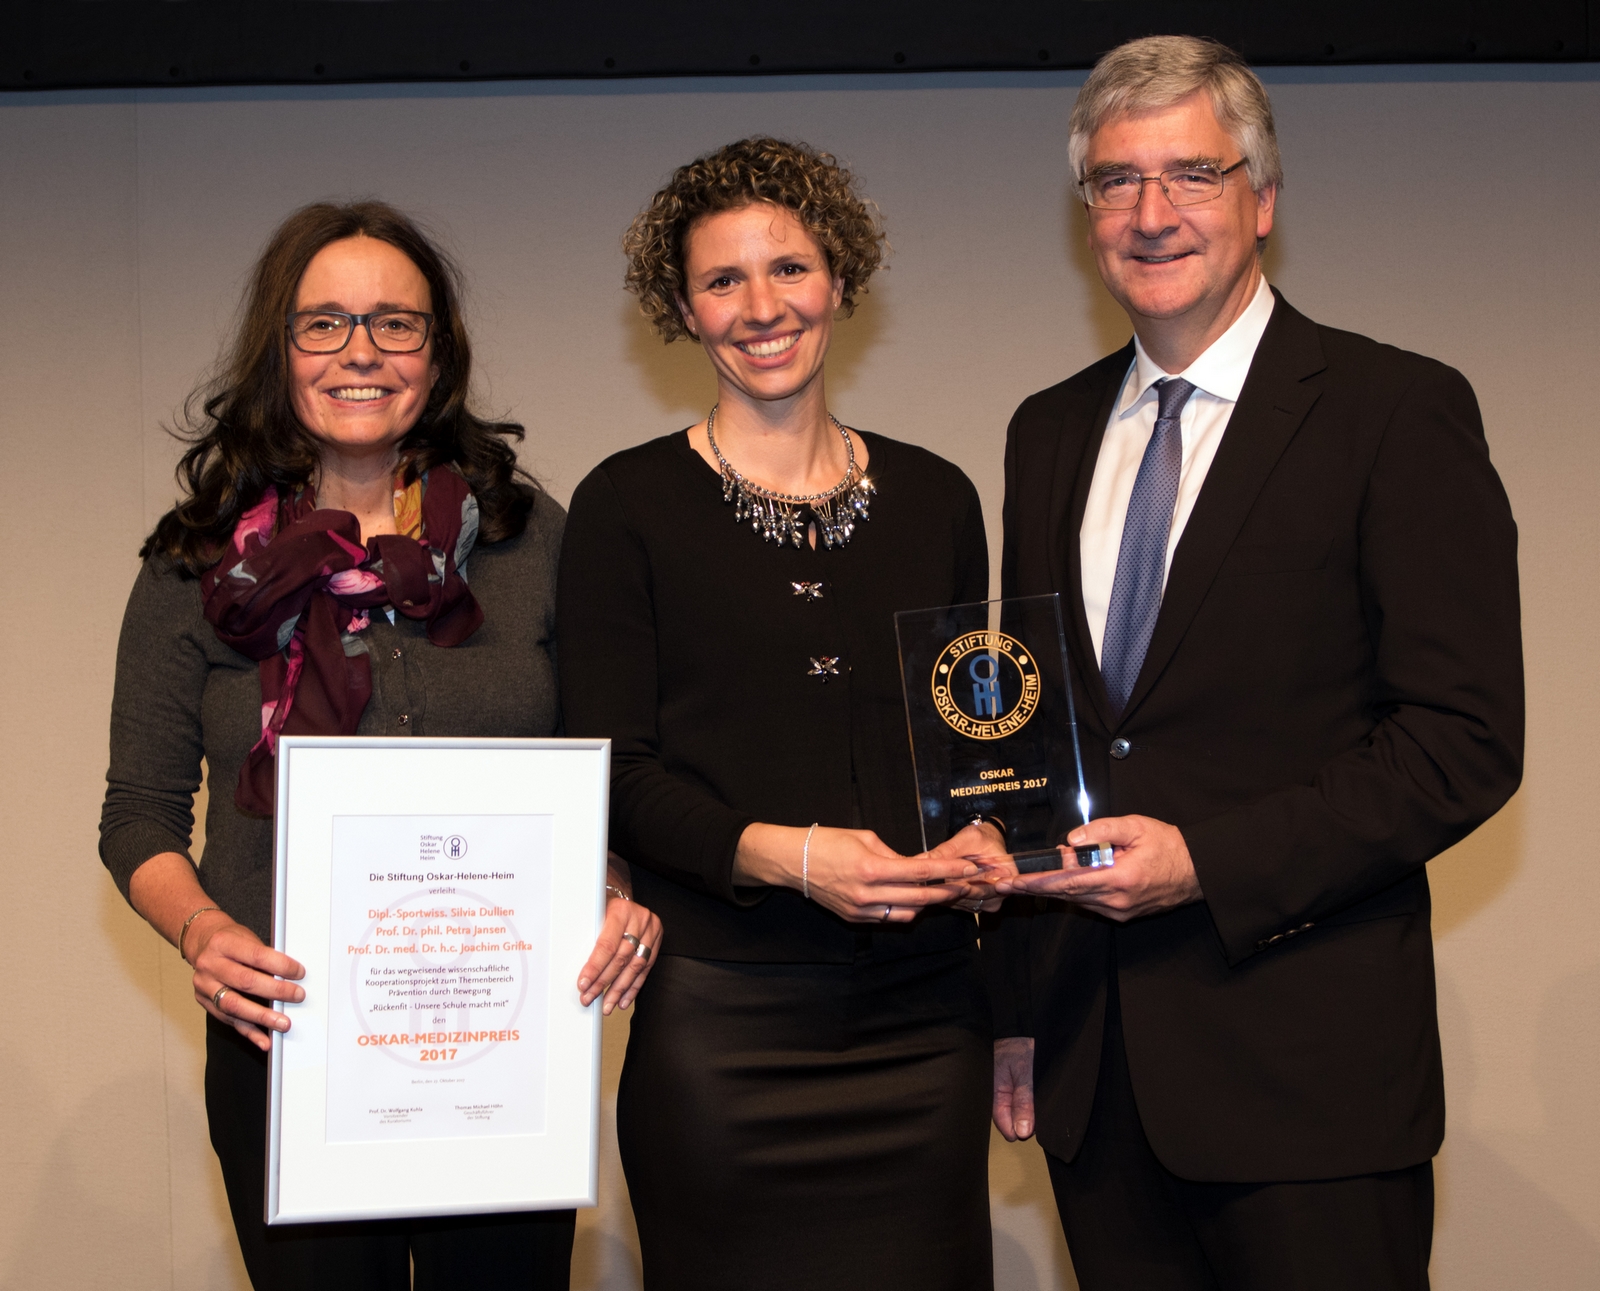 Preisträger OSKAR Medizinpreis 2017 [Quelle Jan Evers] für Pressemailer